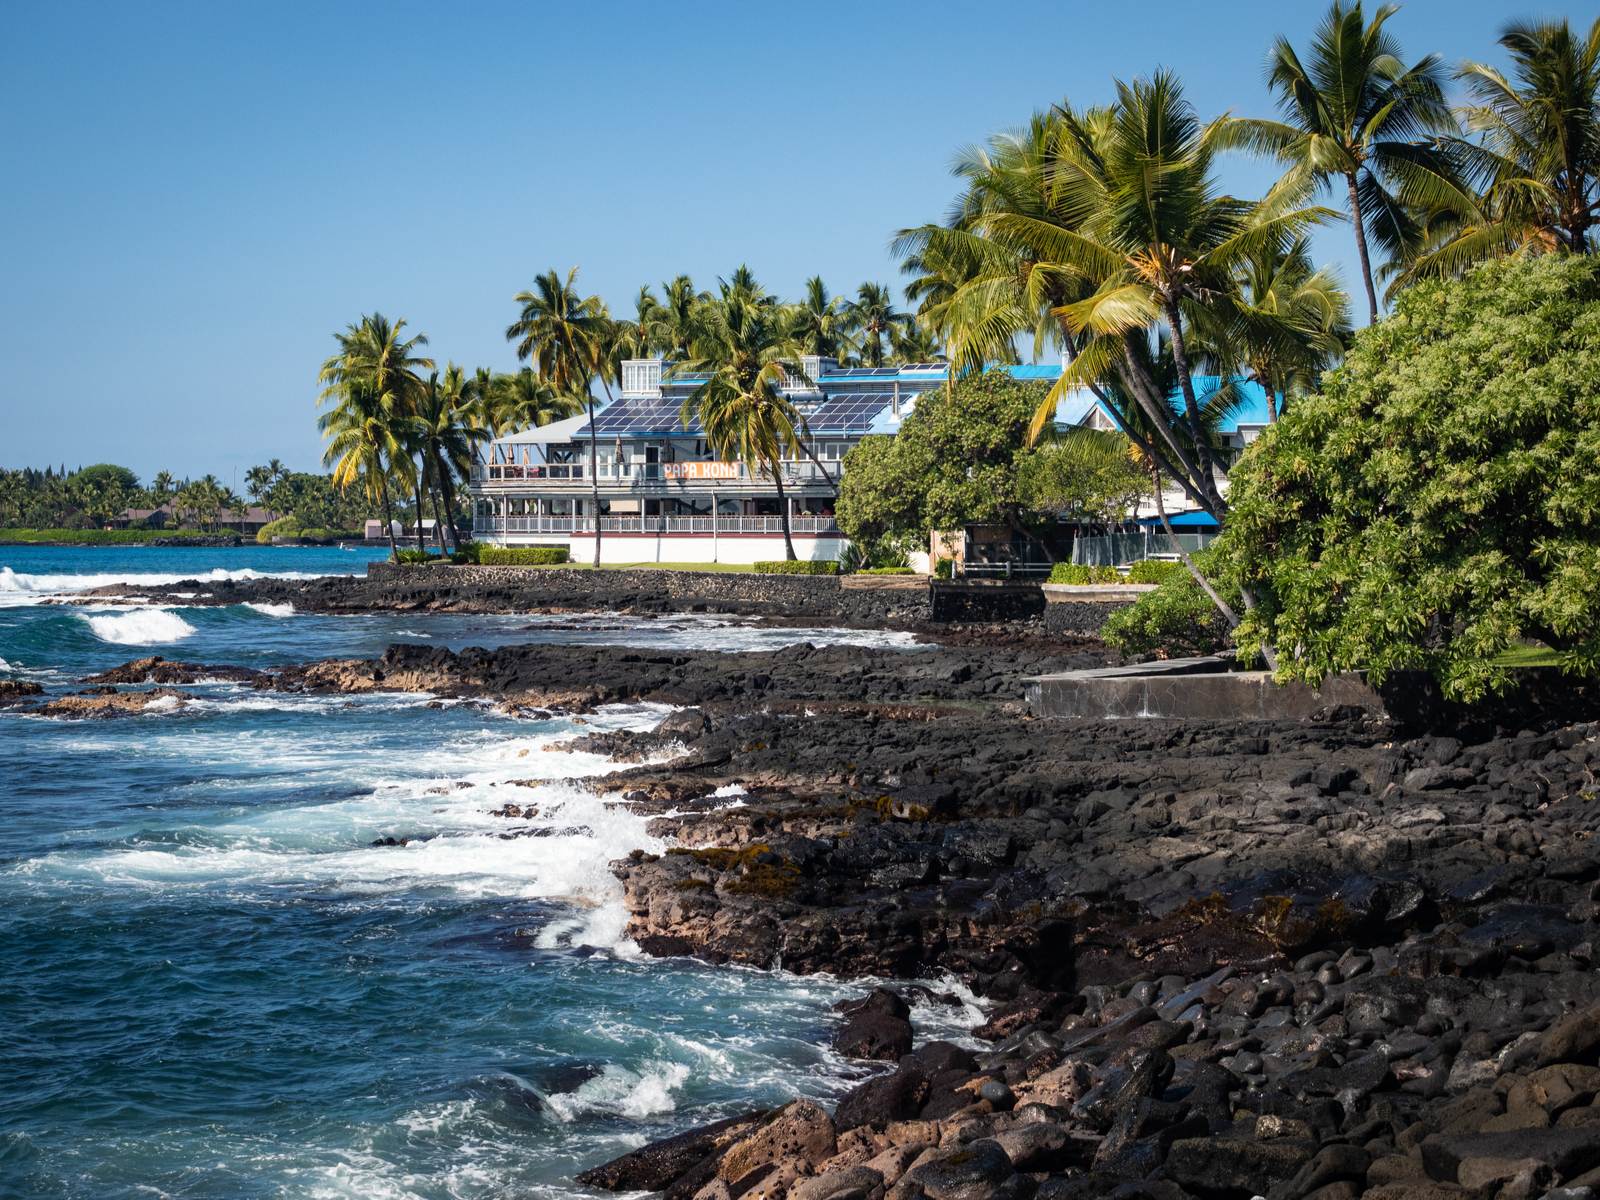 Papa Kona Restaurant, one of the best restaurants in Kona, Hawaii, surrounded by palm trees on a rocky coastline 